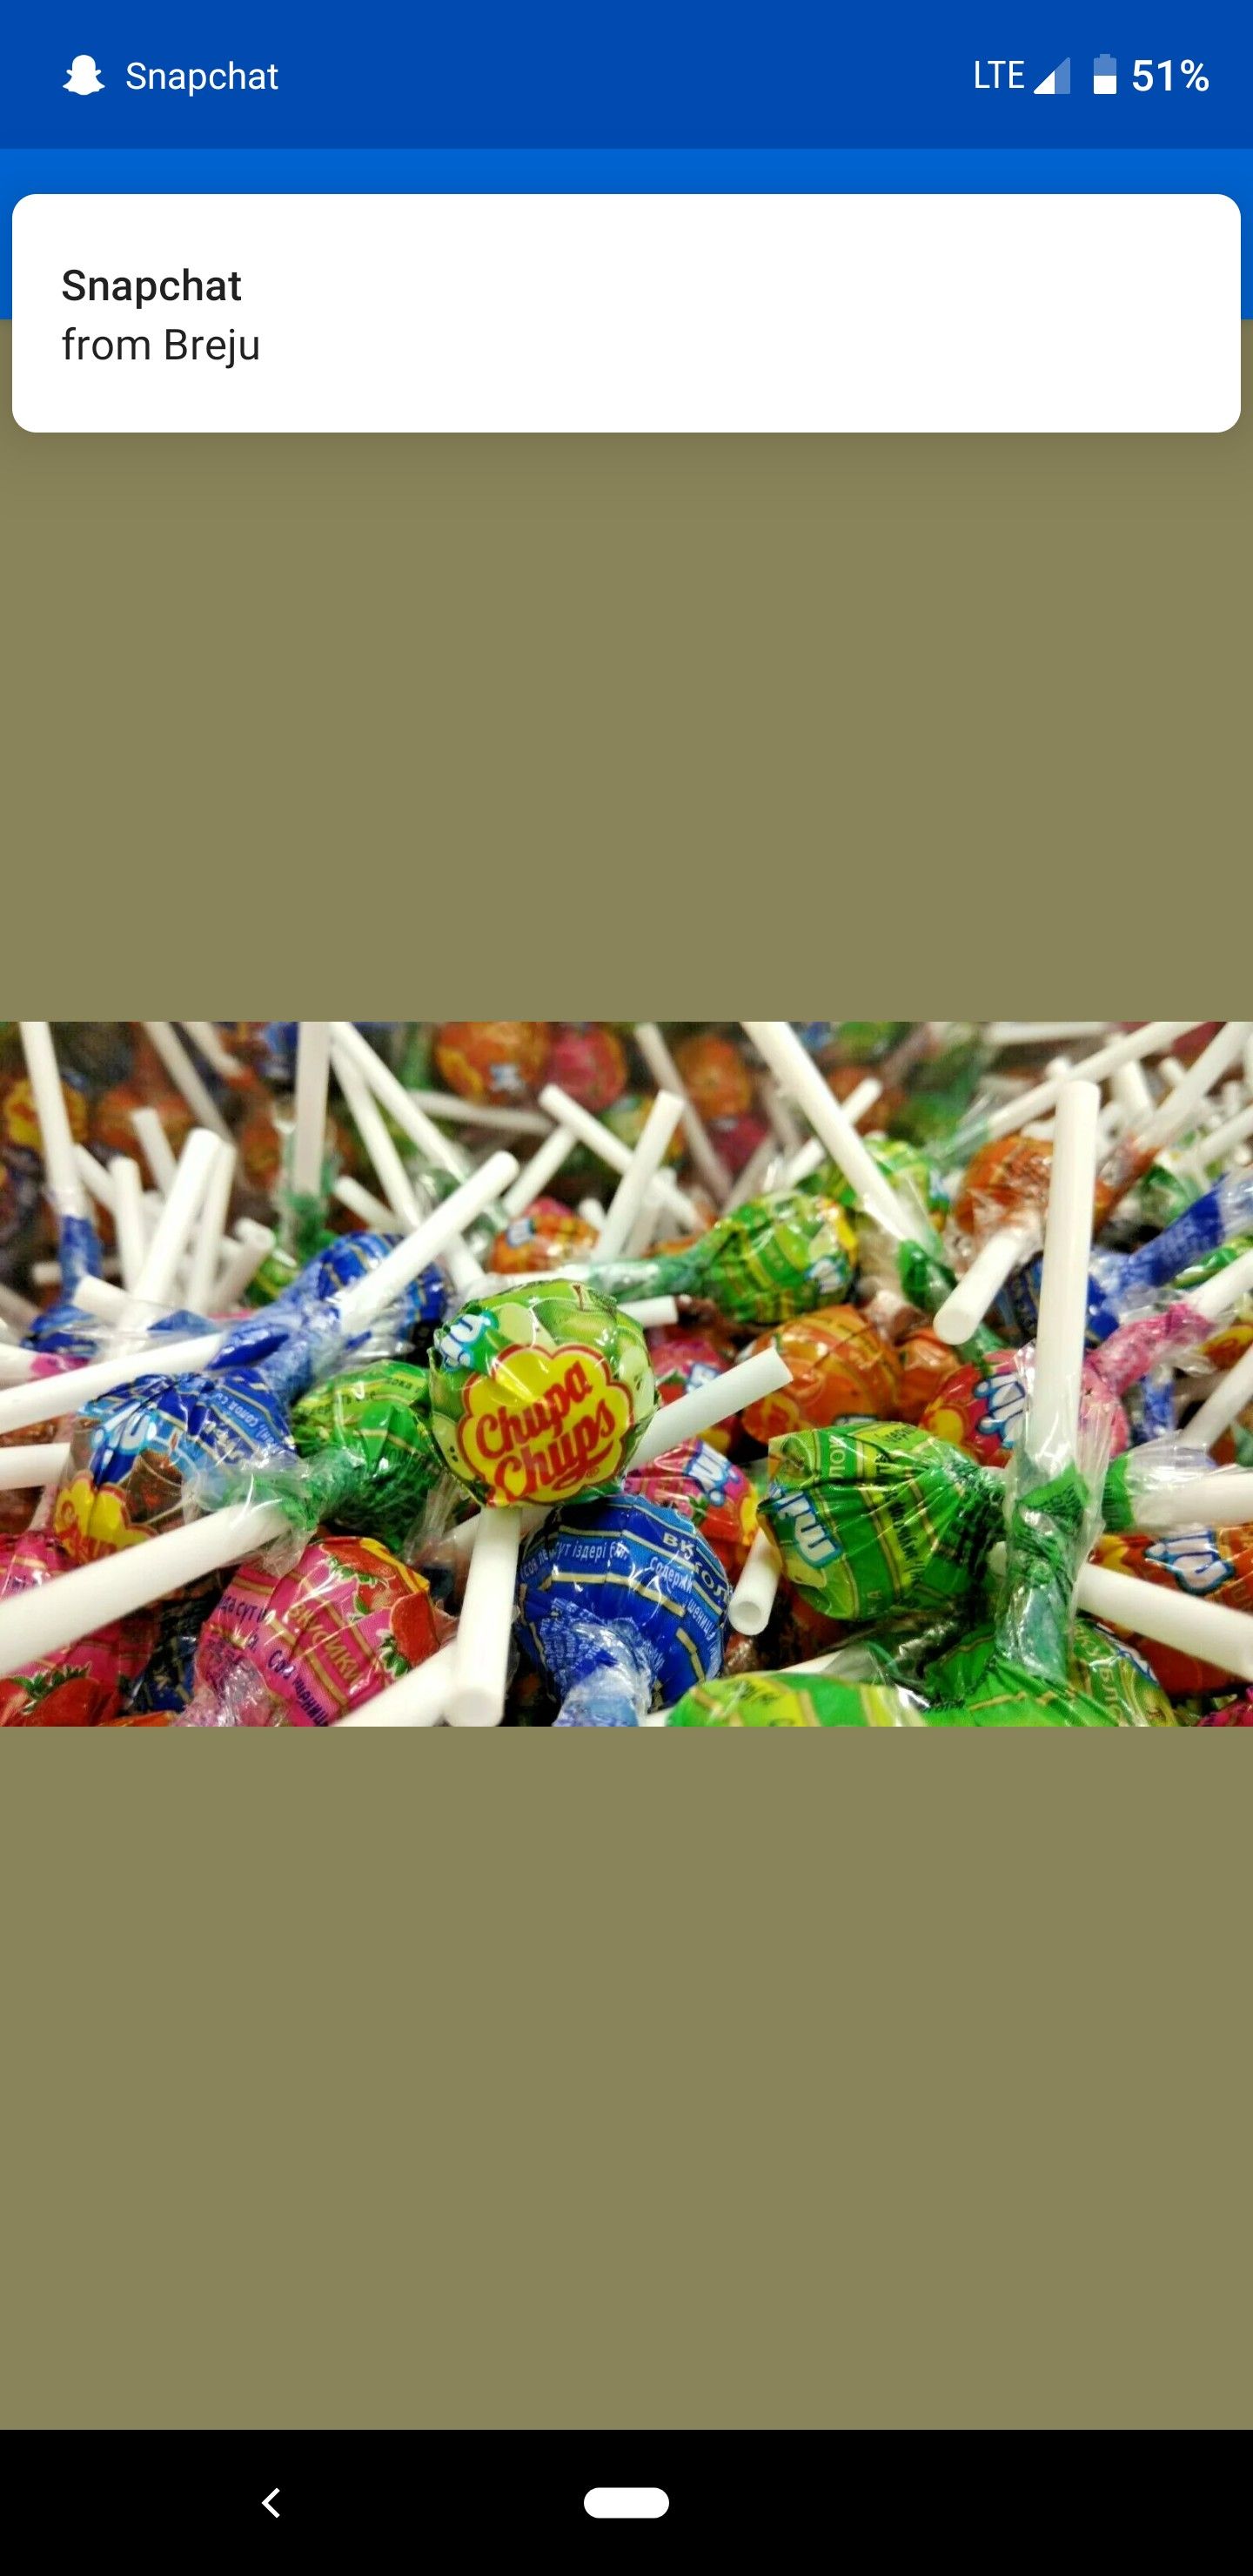 Chupa chups lollipops box of 500 pieces